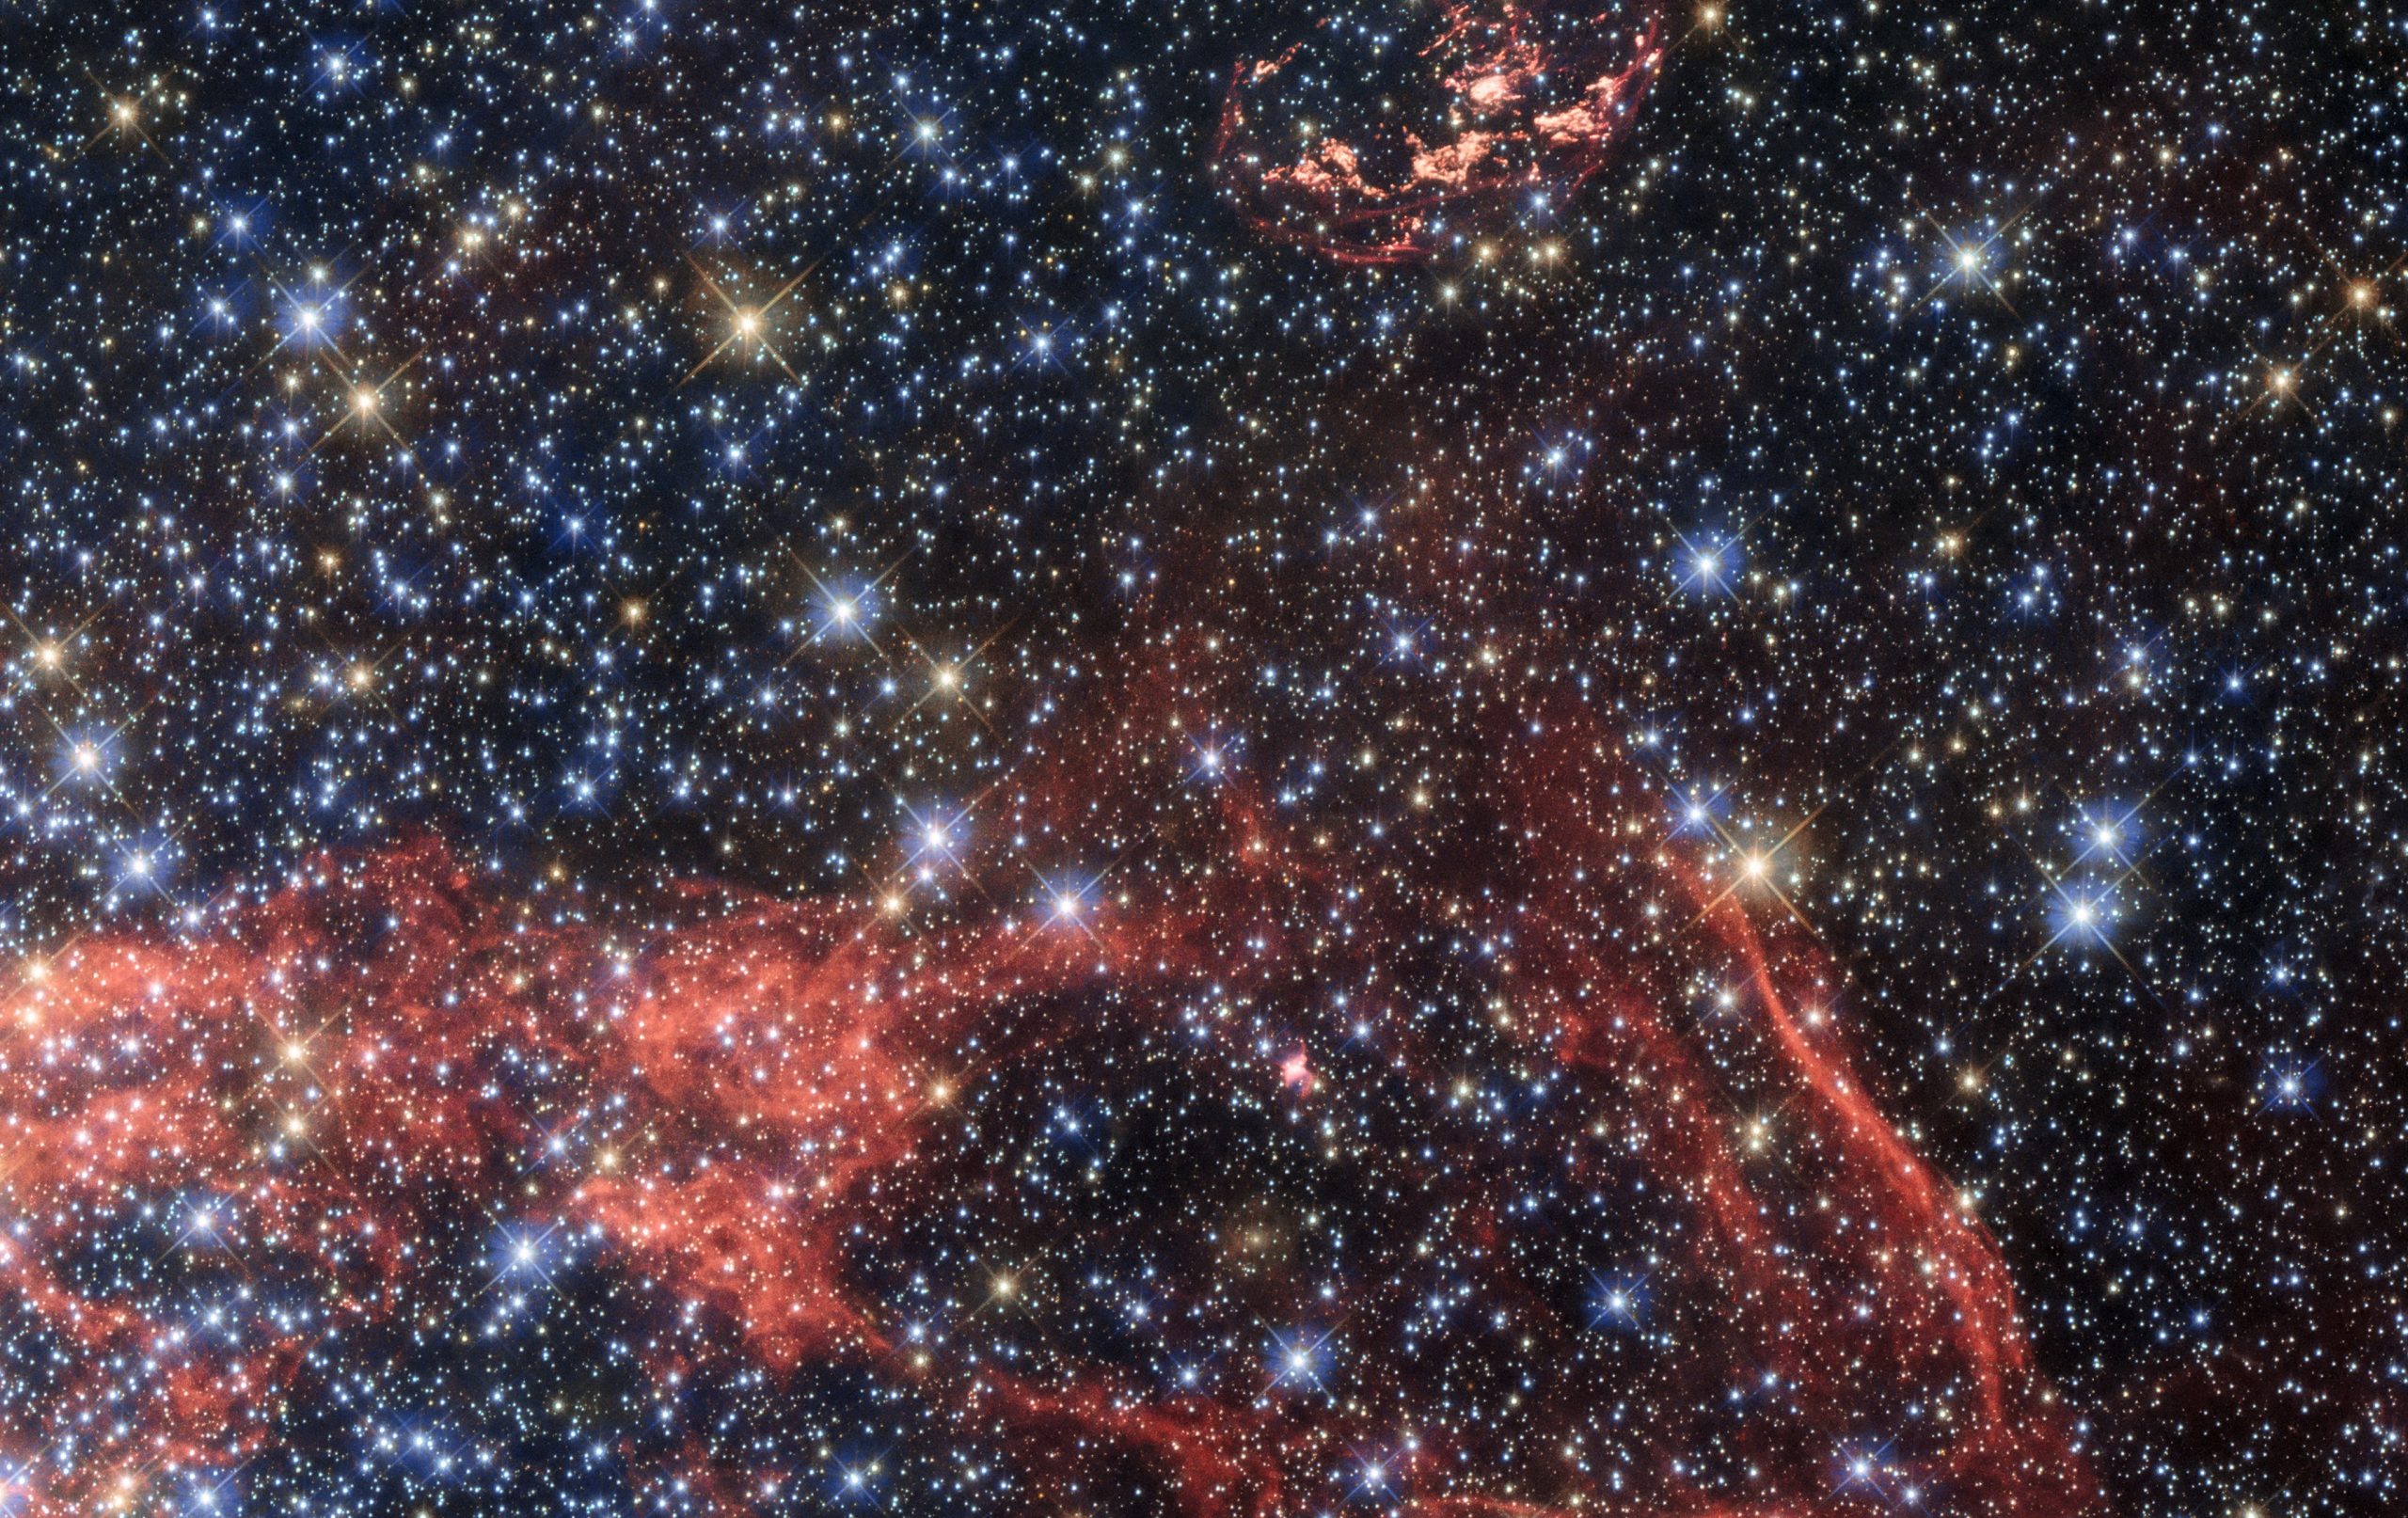 Supernova remnant N103B